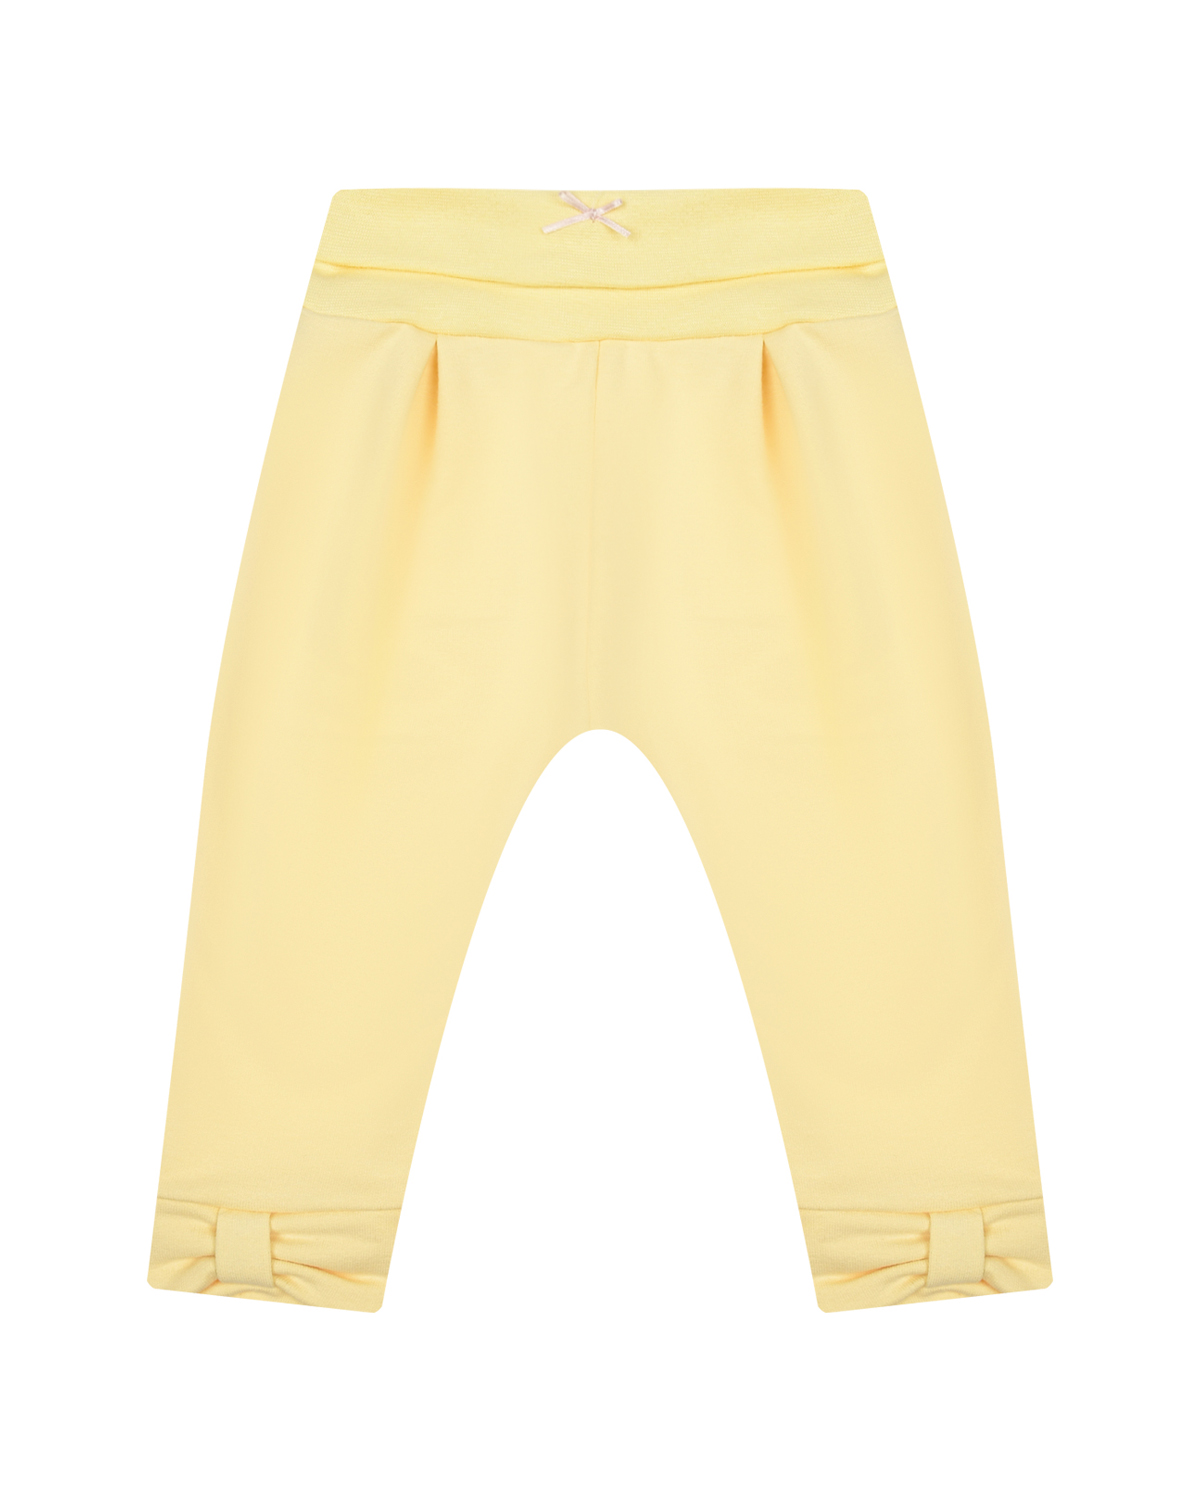 Желтые спортивные брюки с бантами Sanetta fiftyseven желтые спортивные брюки с лого moschino